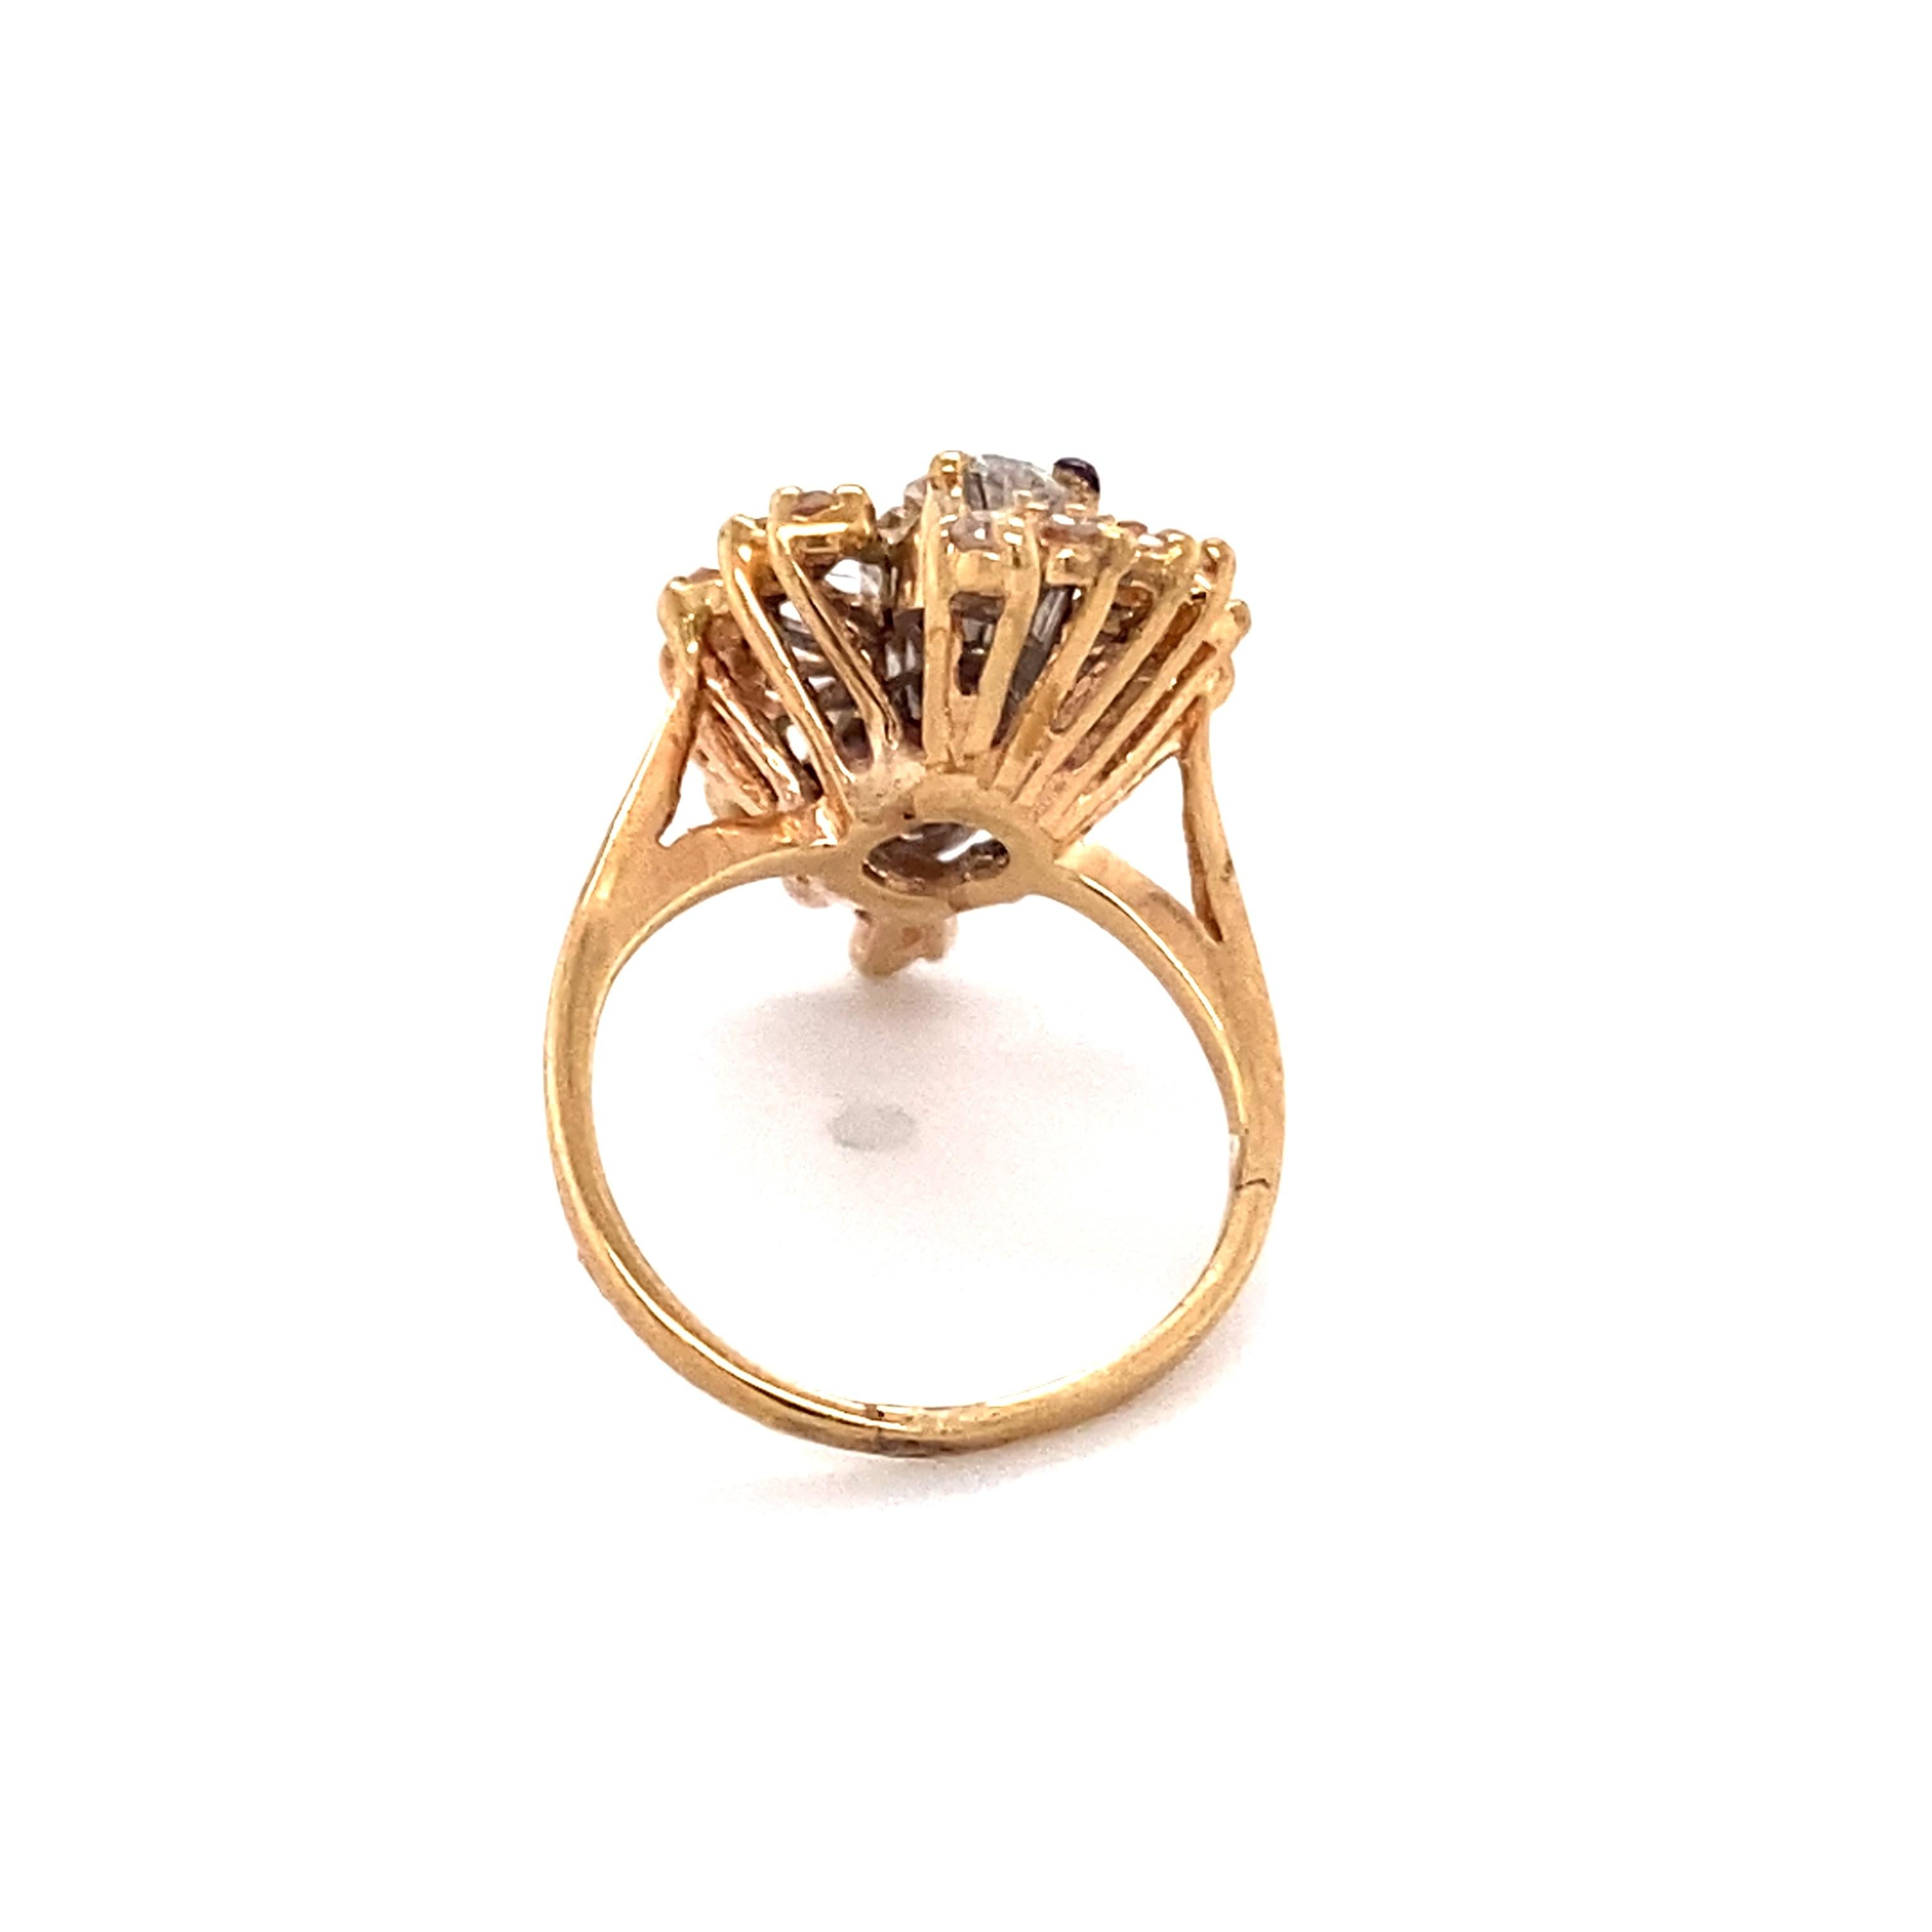 Circa 1920s Art Deco 0.76 Carat Total Diamond Ring in 14 Karat Yellow Gold 1